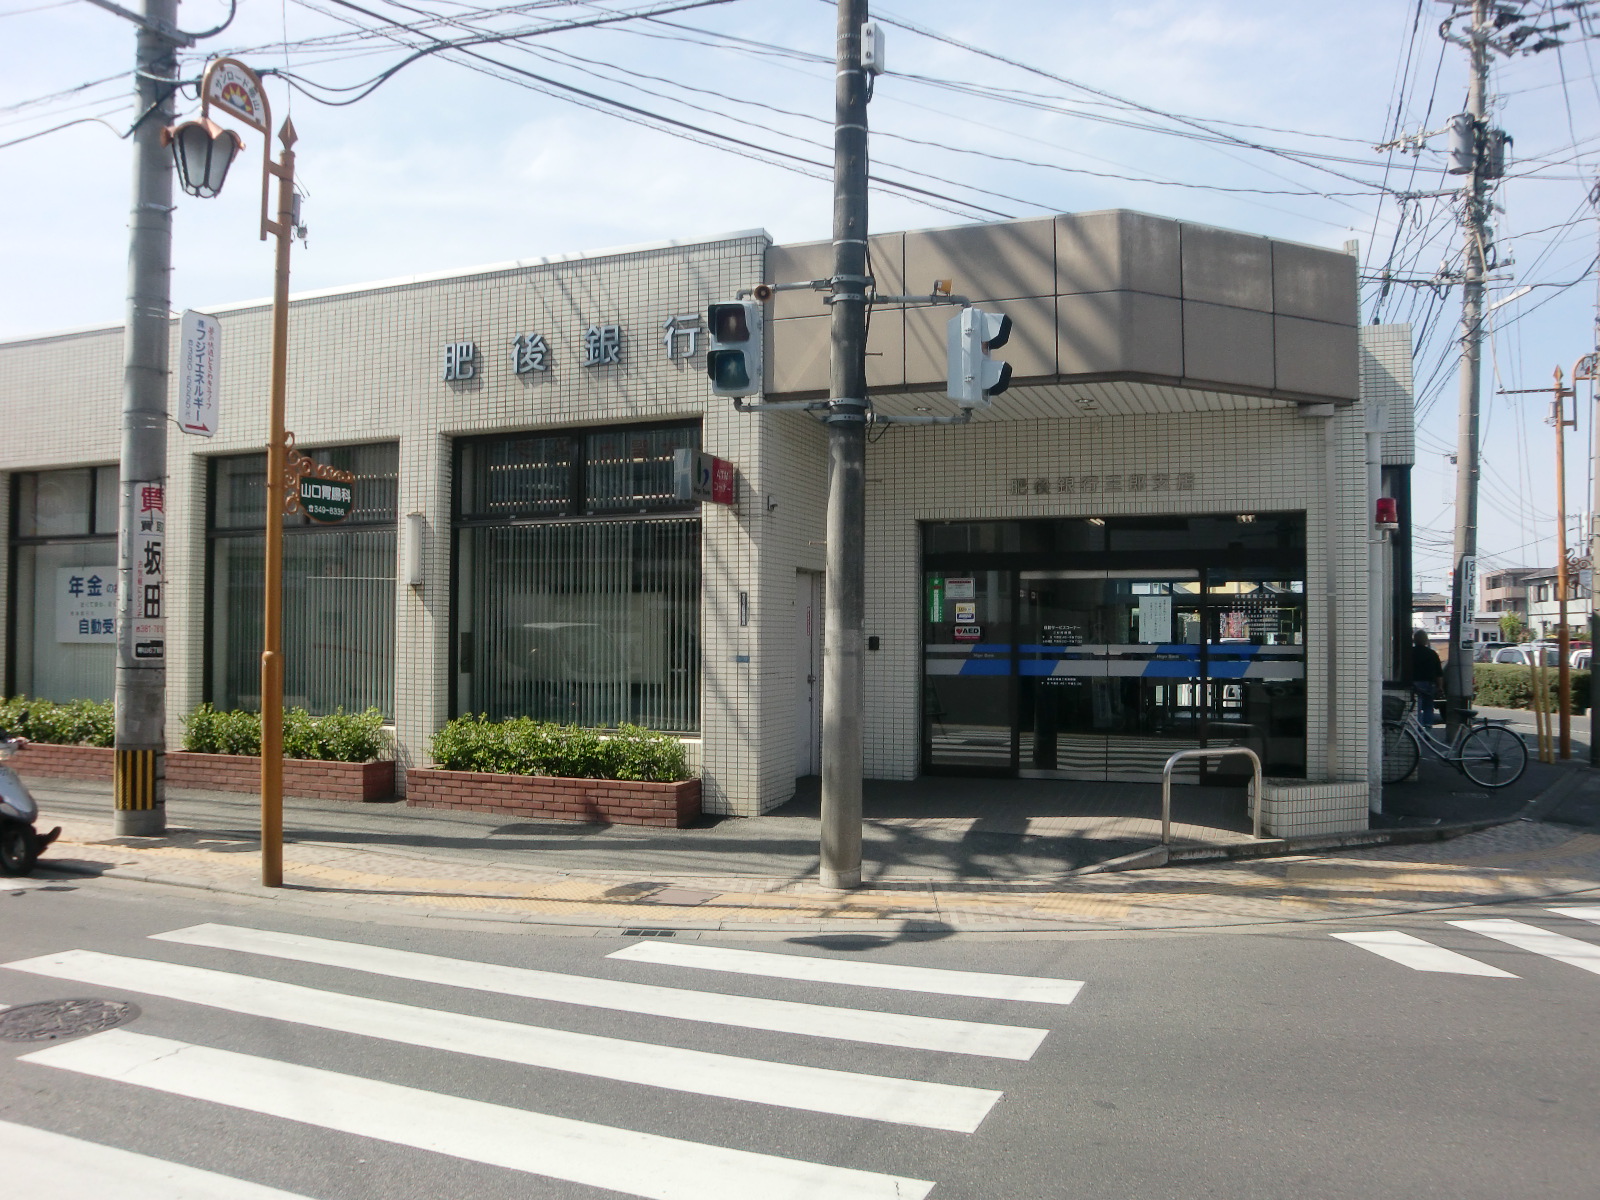 Bank. 455m to Higo Bank Saburo Branch (Bank)